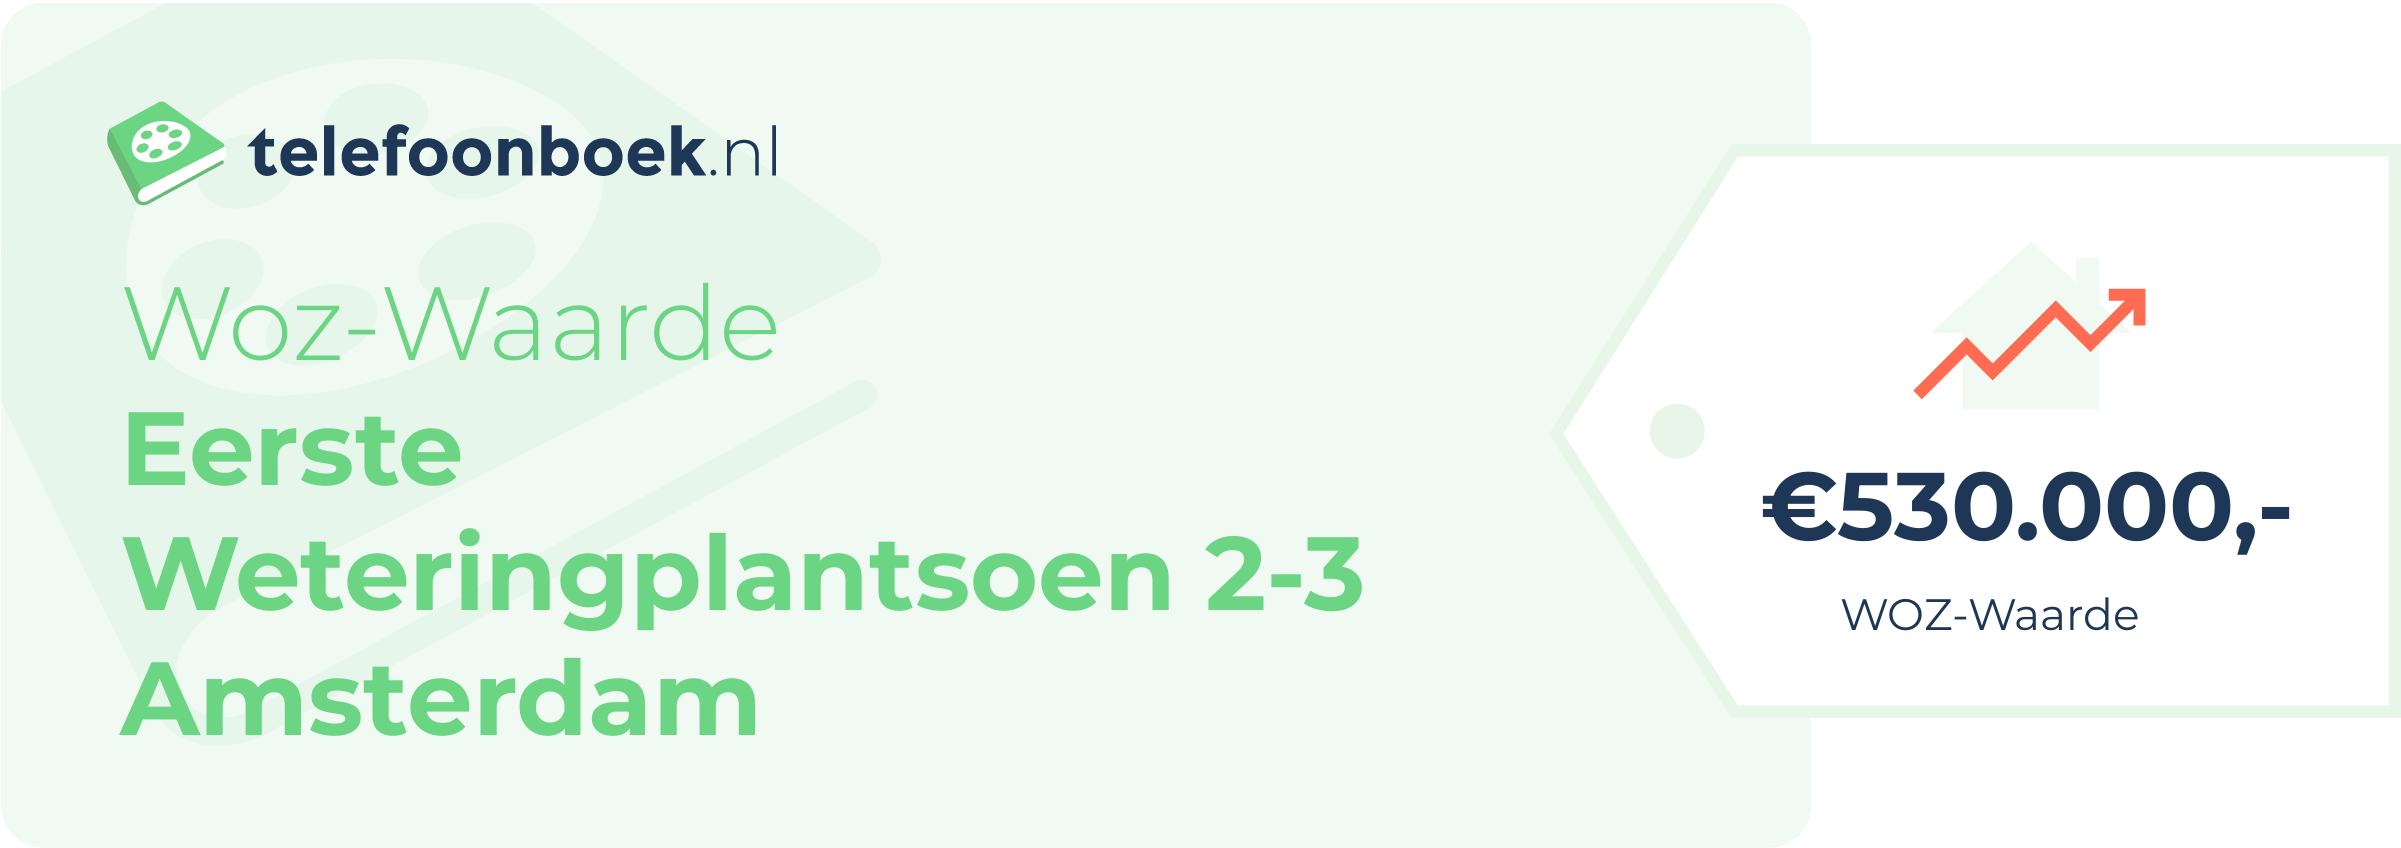 WOZ-waarde Eerste Weteringplantsoen 2-3 Amsterdam